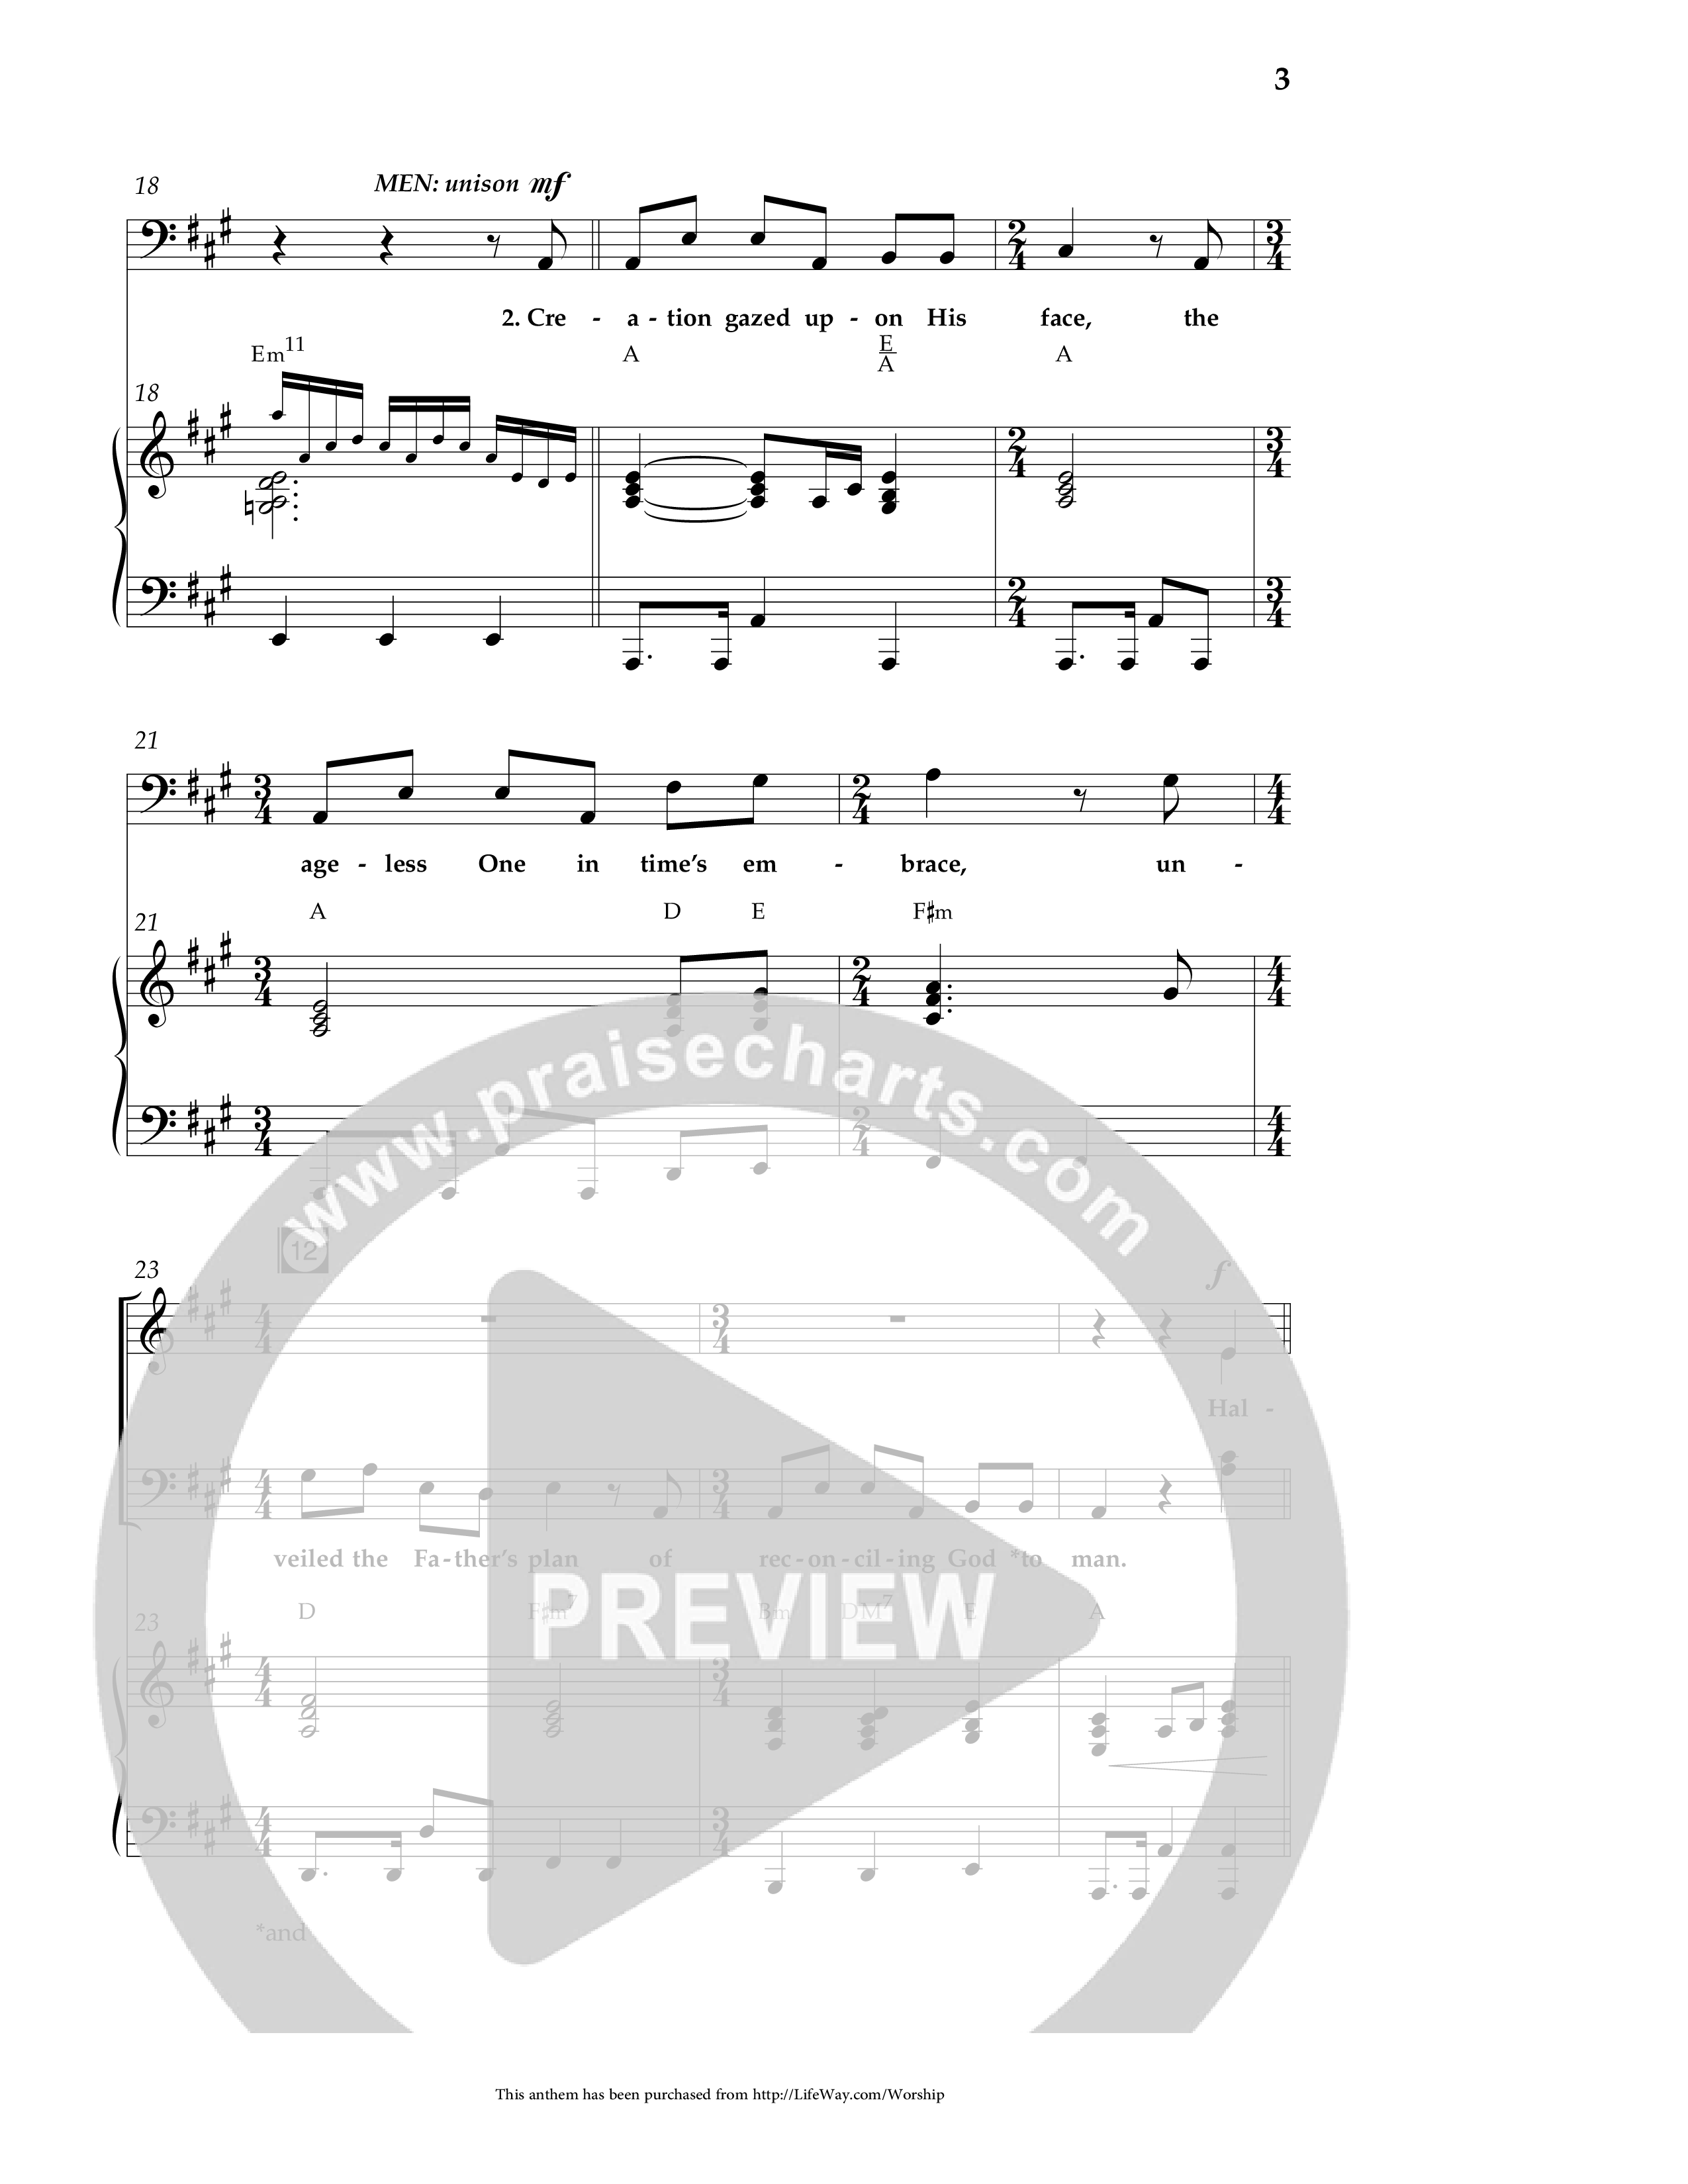 Creation Sings (Choral Anthem SATB) Anthem (SATB/Piano) (Lifeway Choral / Arr. Dave Williamson)